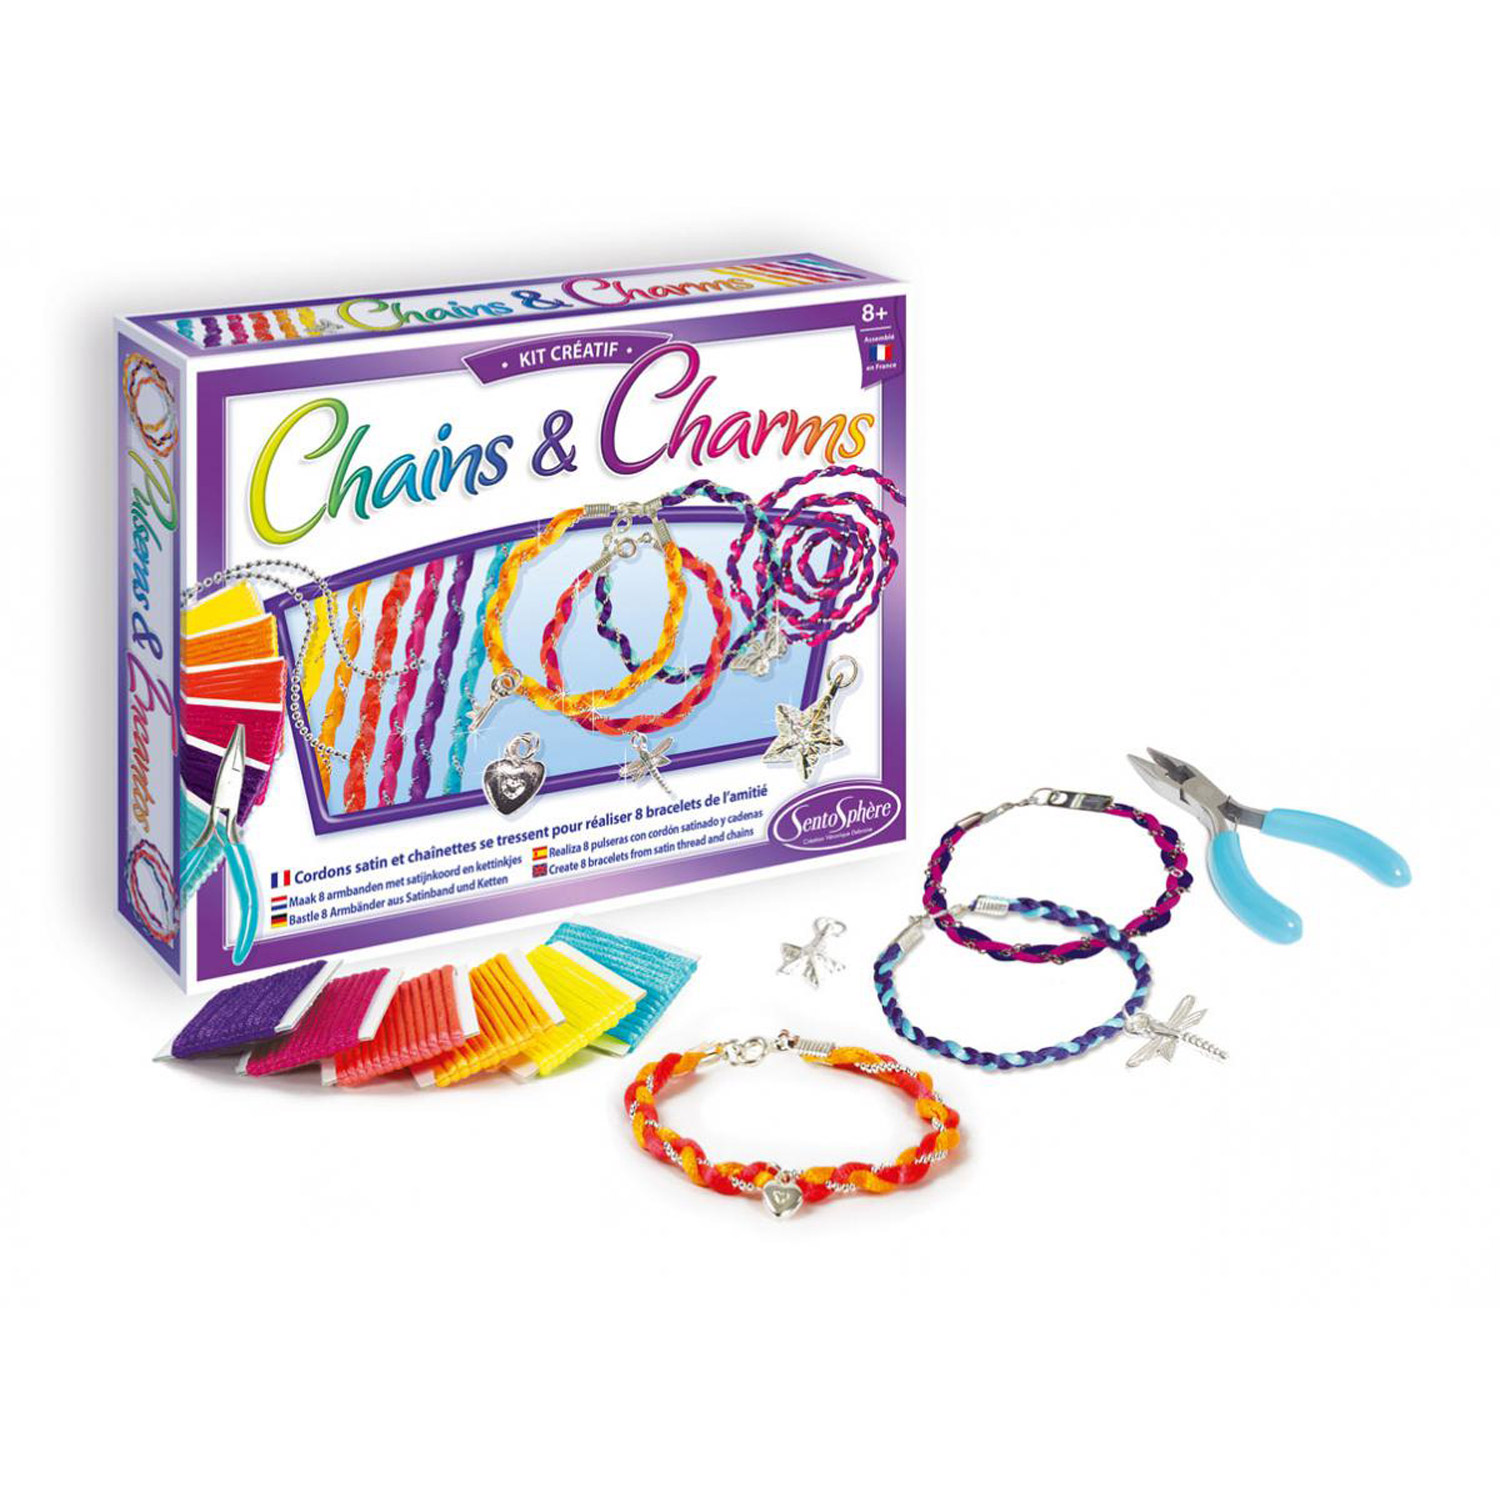 Kit créatif bracelet : Chains & Charms